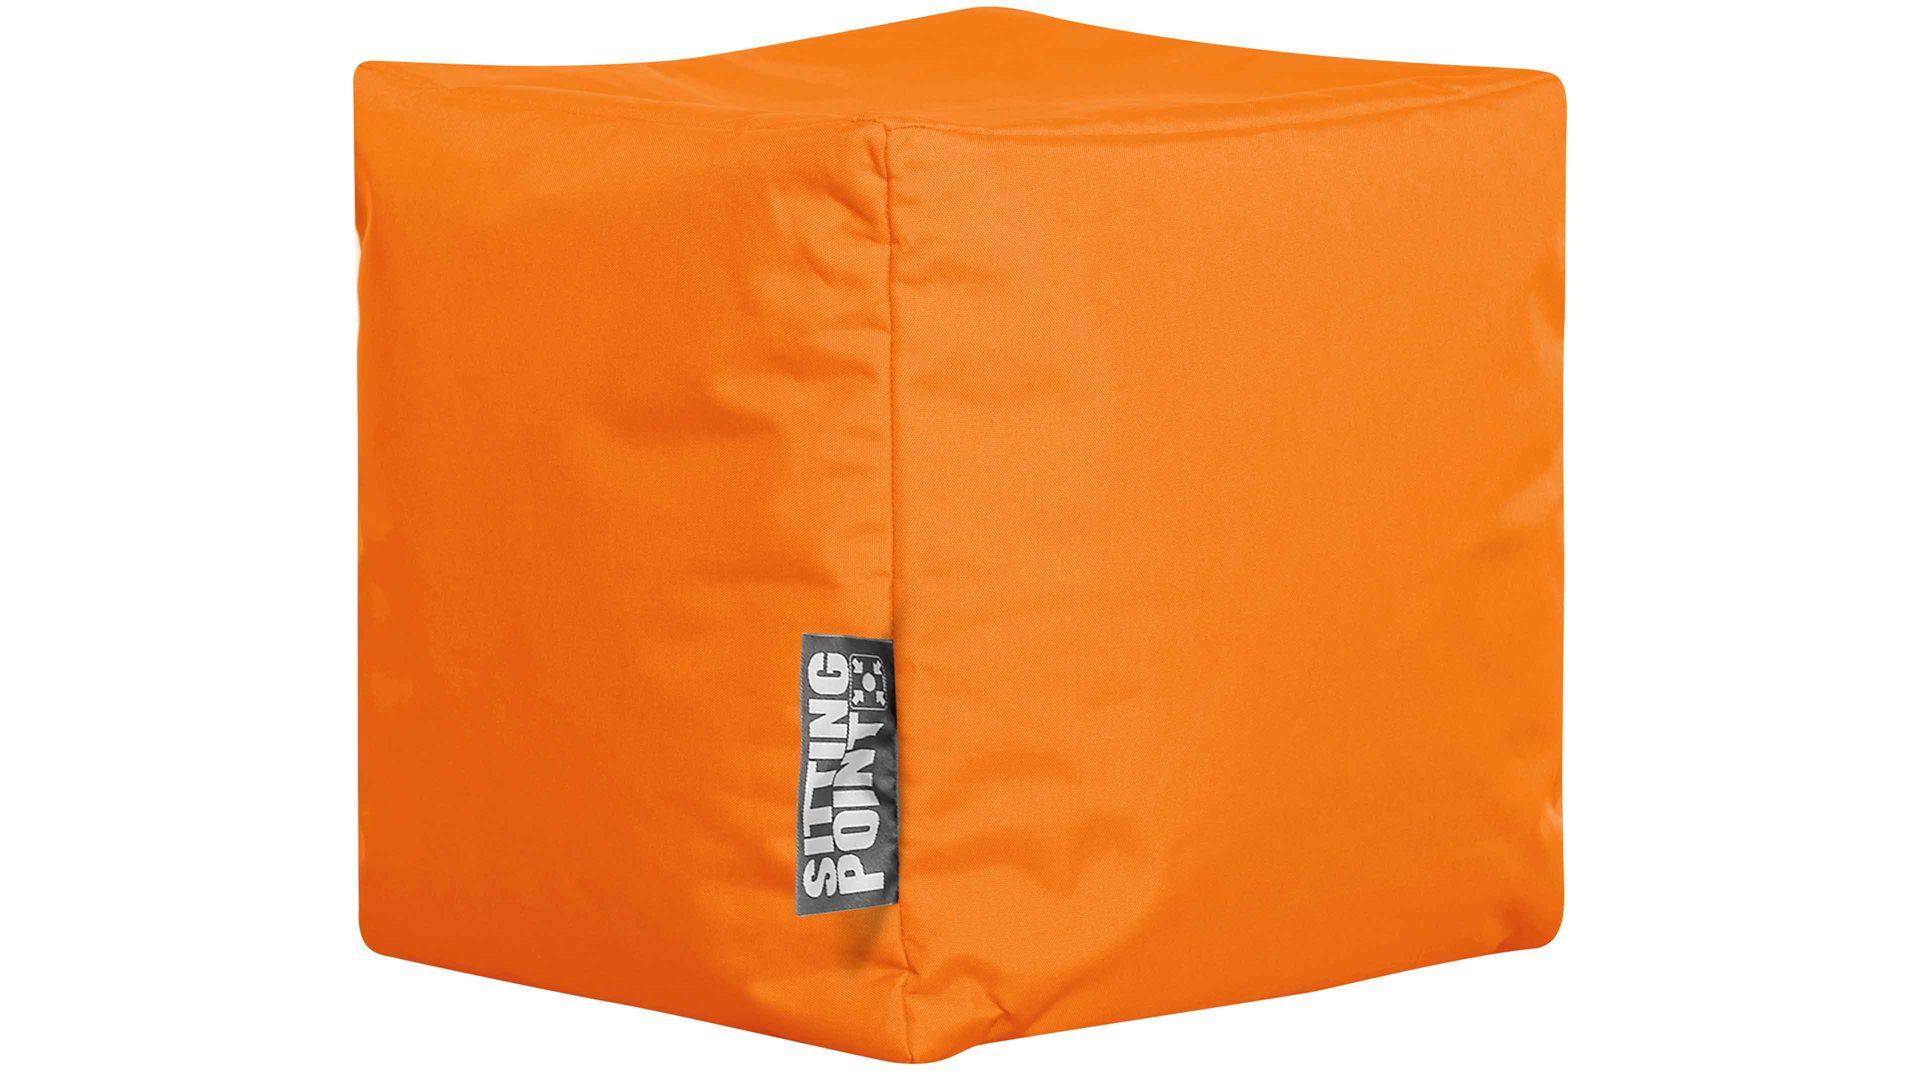 Sitzsack-Würfel Magma sitting point aus Kunstfaser in Orange SITTING POINT Sitzwürfel cube scuba® orange Kunstfaser - ca. 40 x 40 x 40 cm